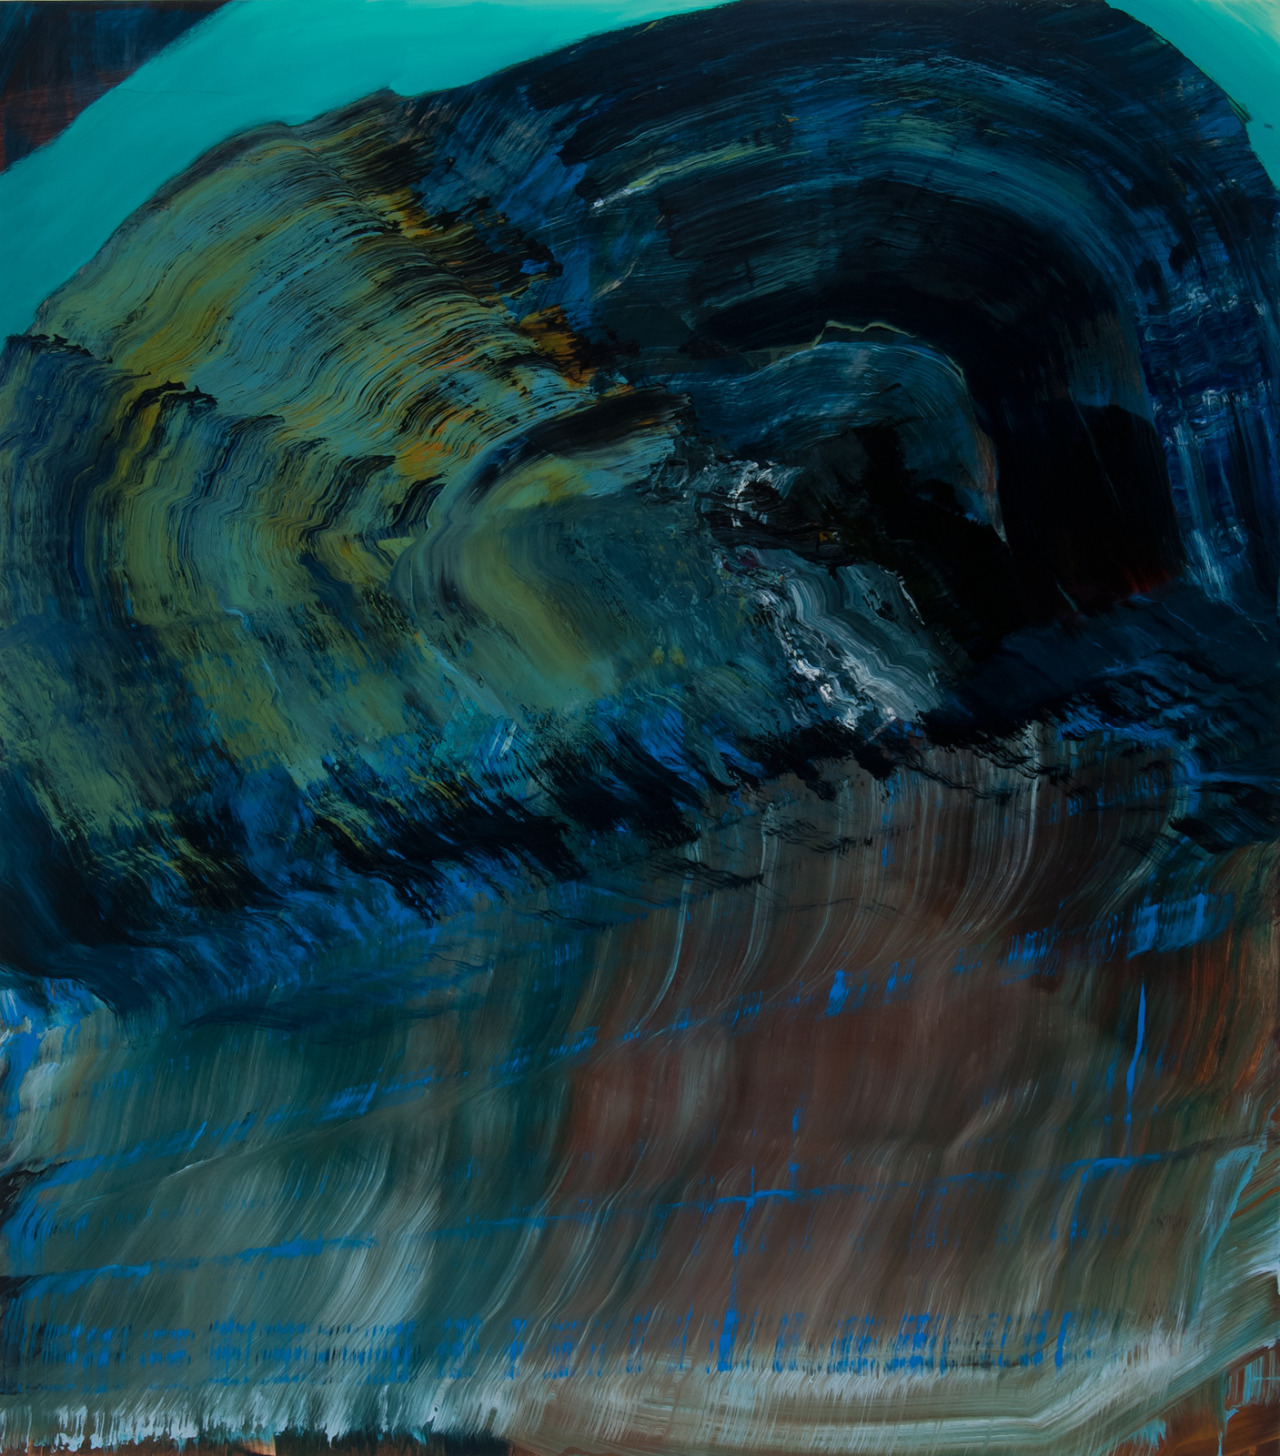 Jeremy Szopinski
Flood #21
Oil on canvas
74” x 65”
2014
http://jeremyszopinski.tumblr.com/